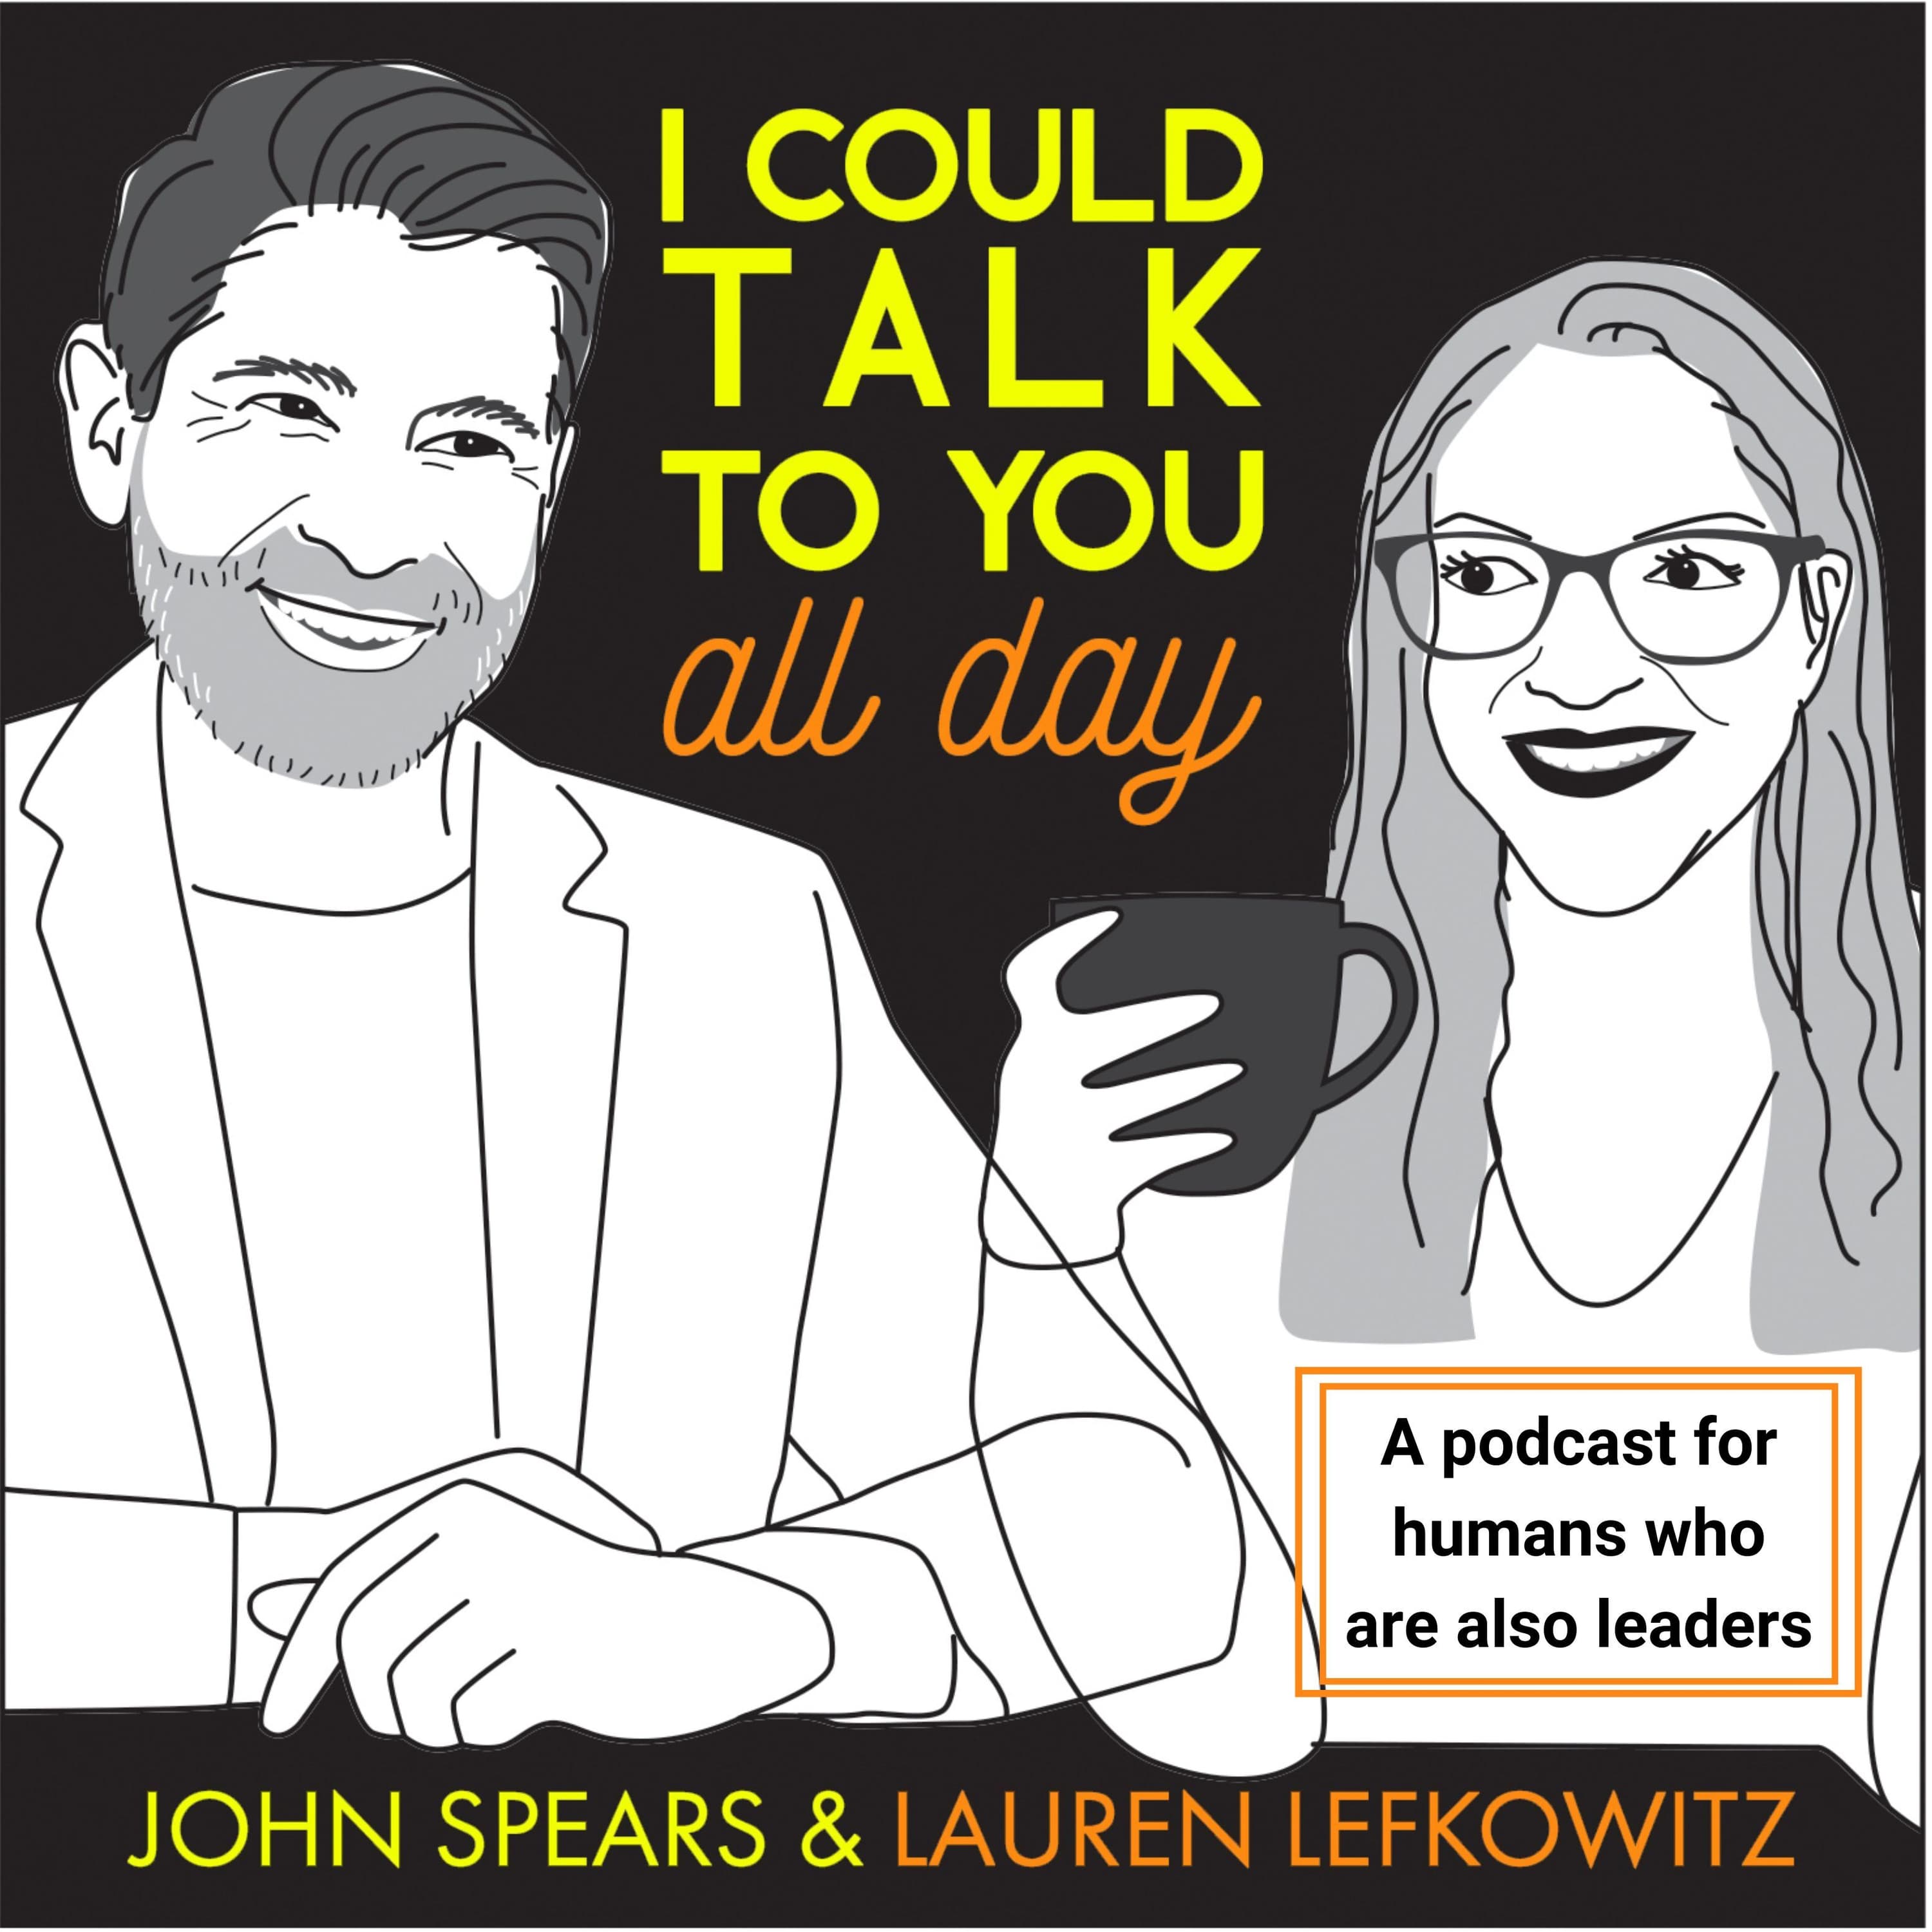 Lauren Lefkowitz podcast Logo